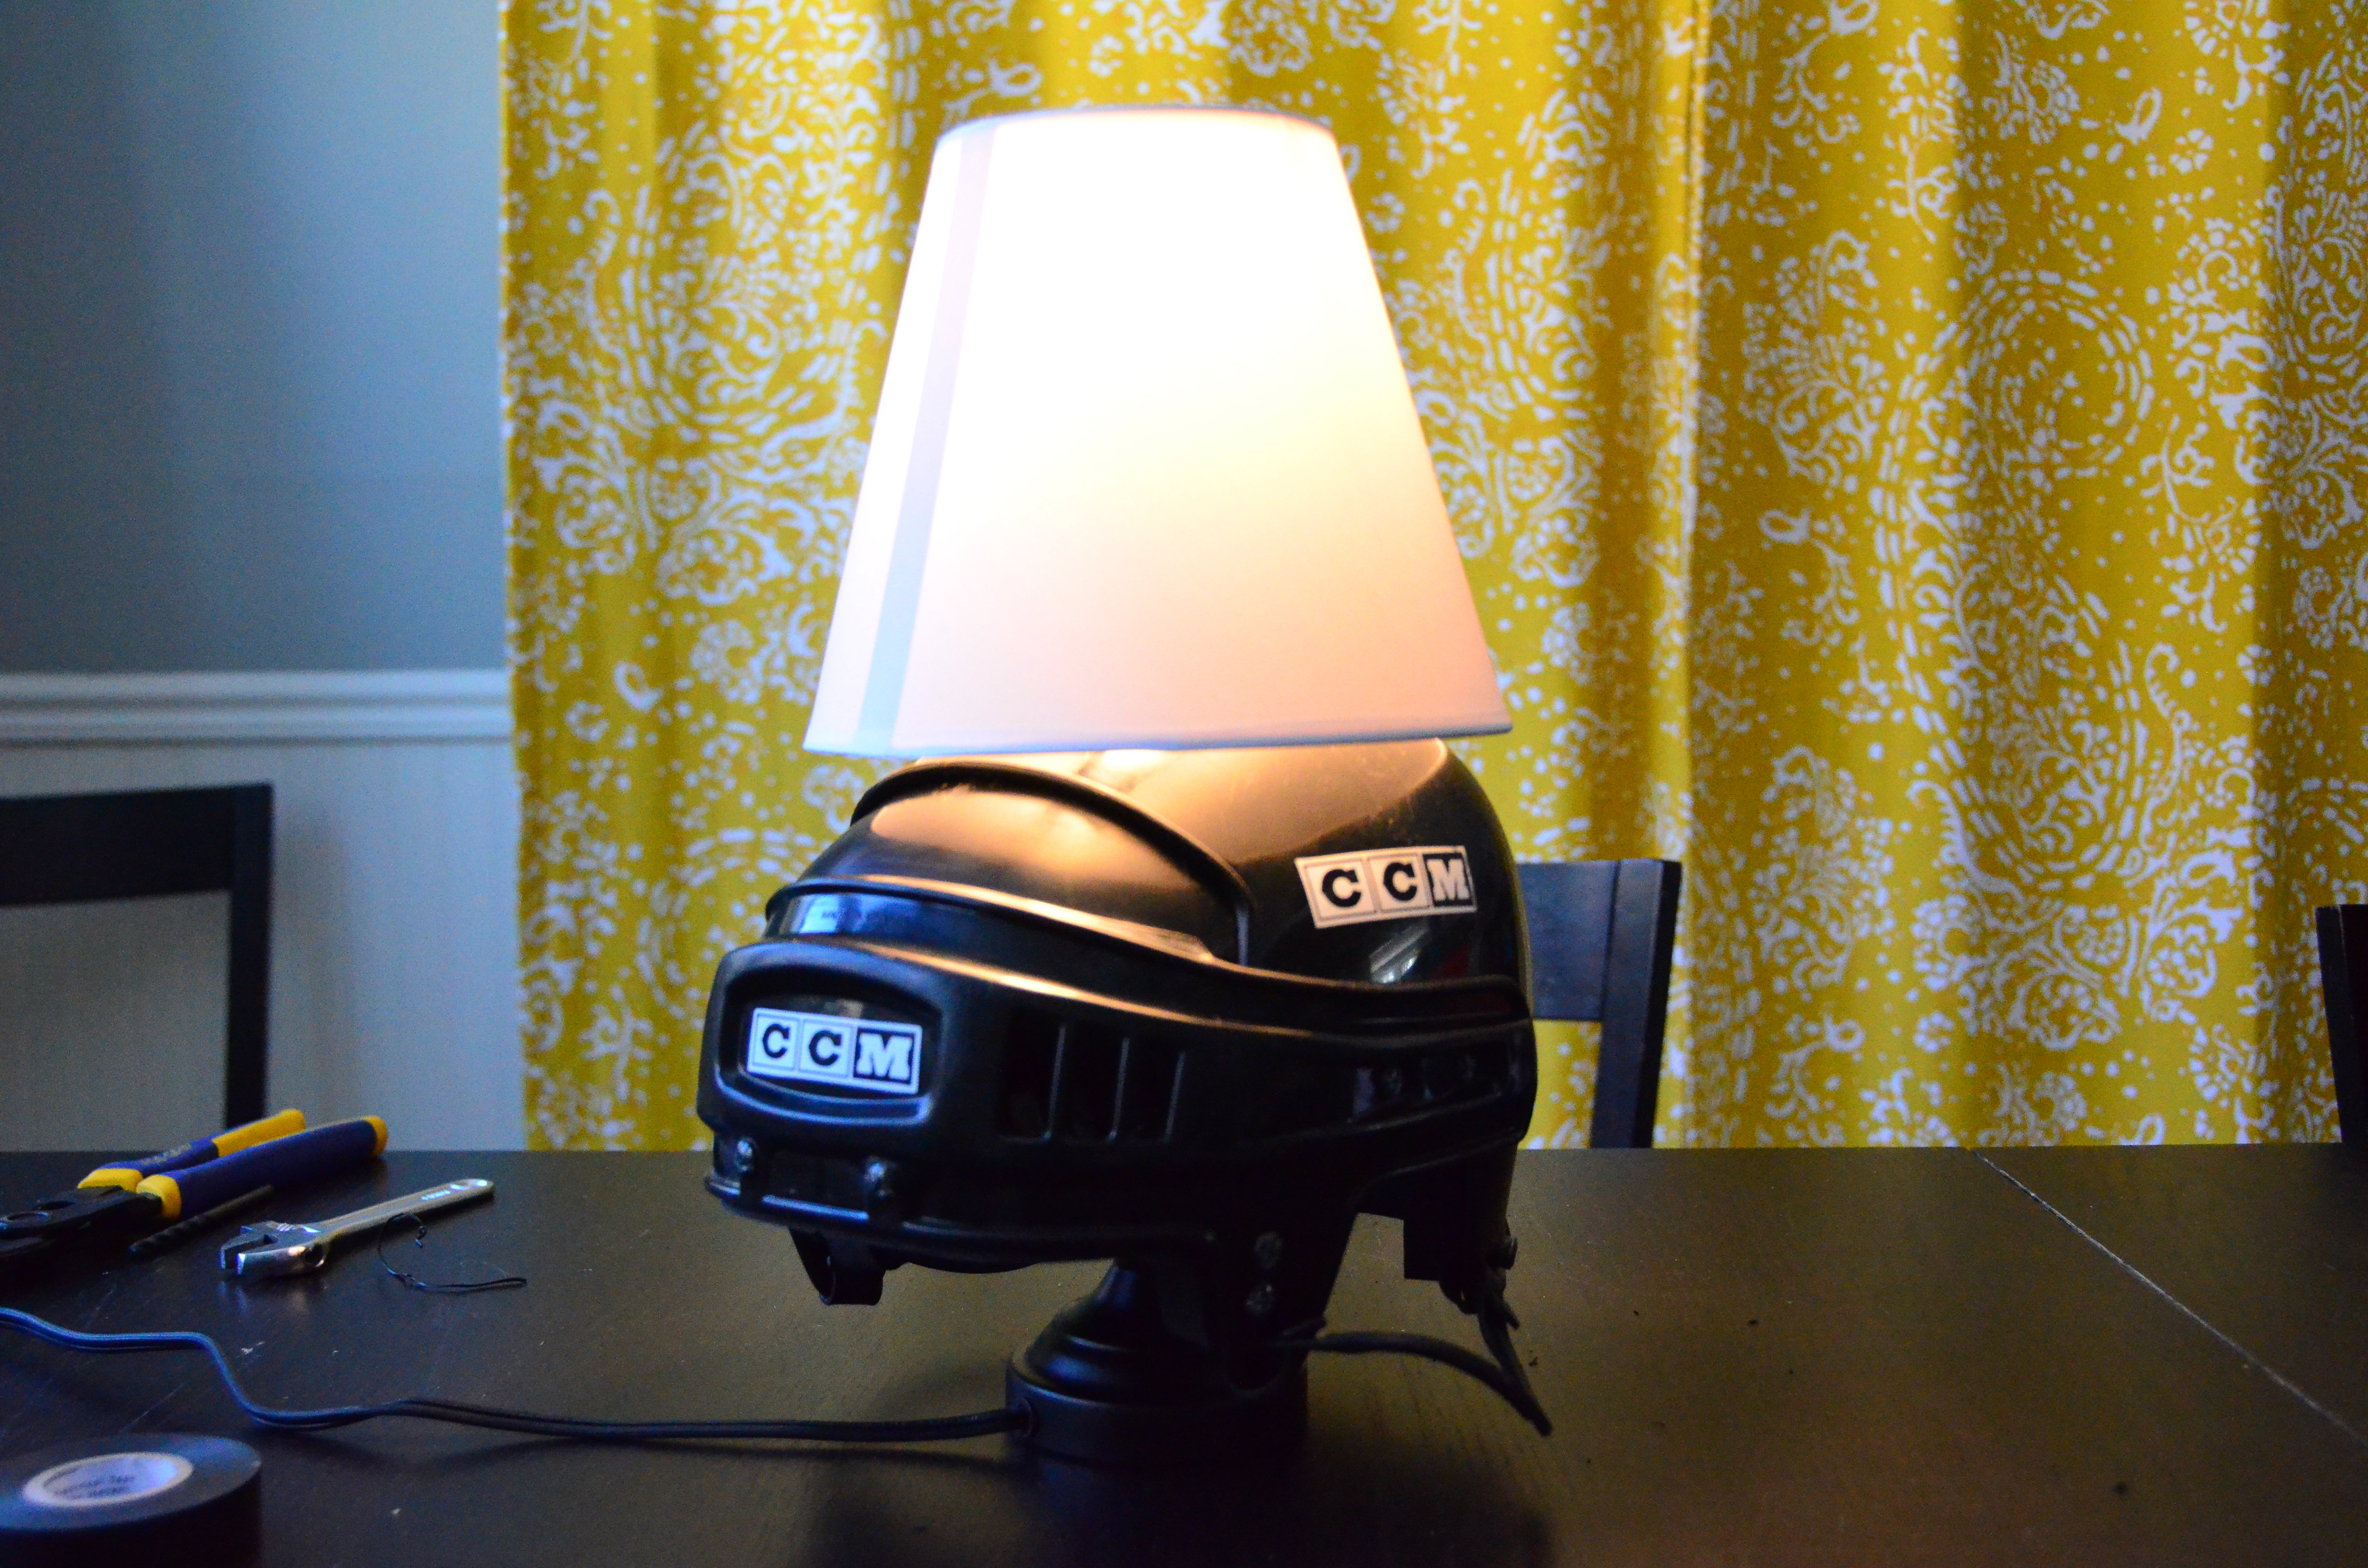 The Coolest Hockey Bedroom EVER – The DIY Hockey Helmet Lamp